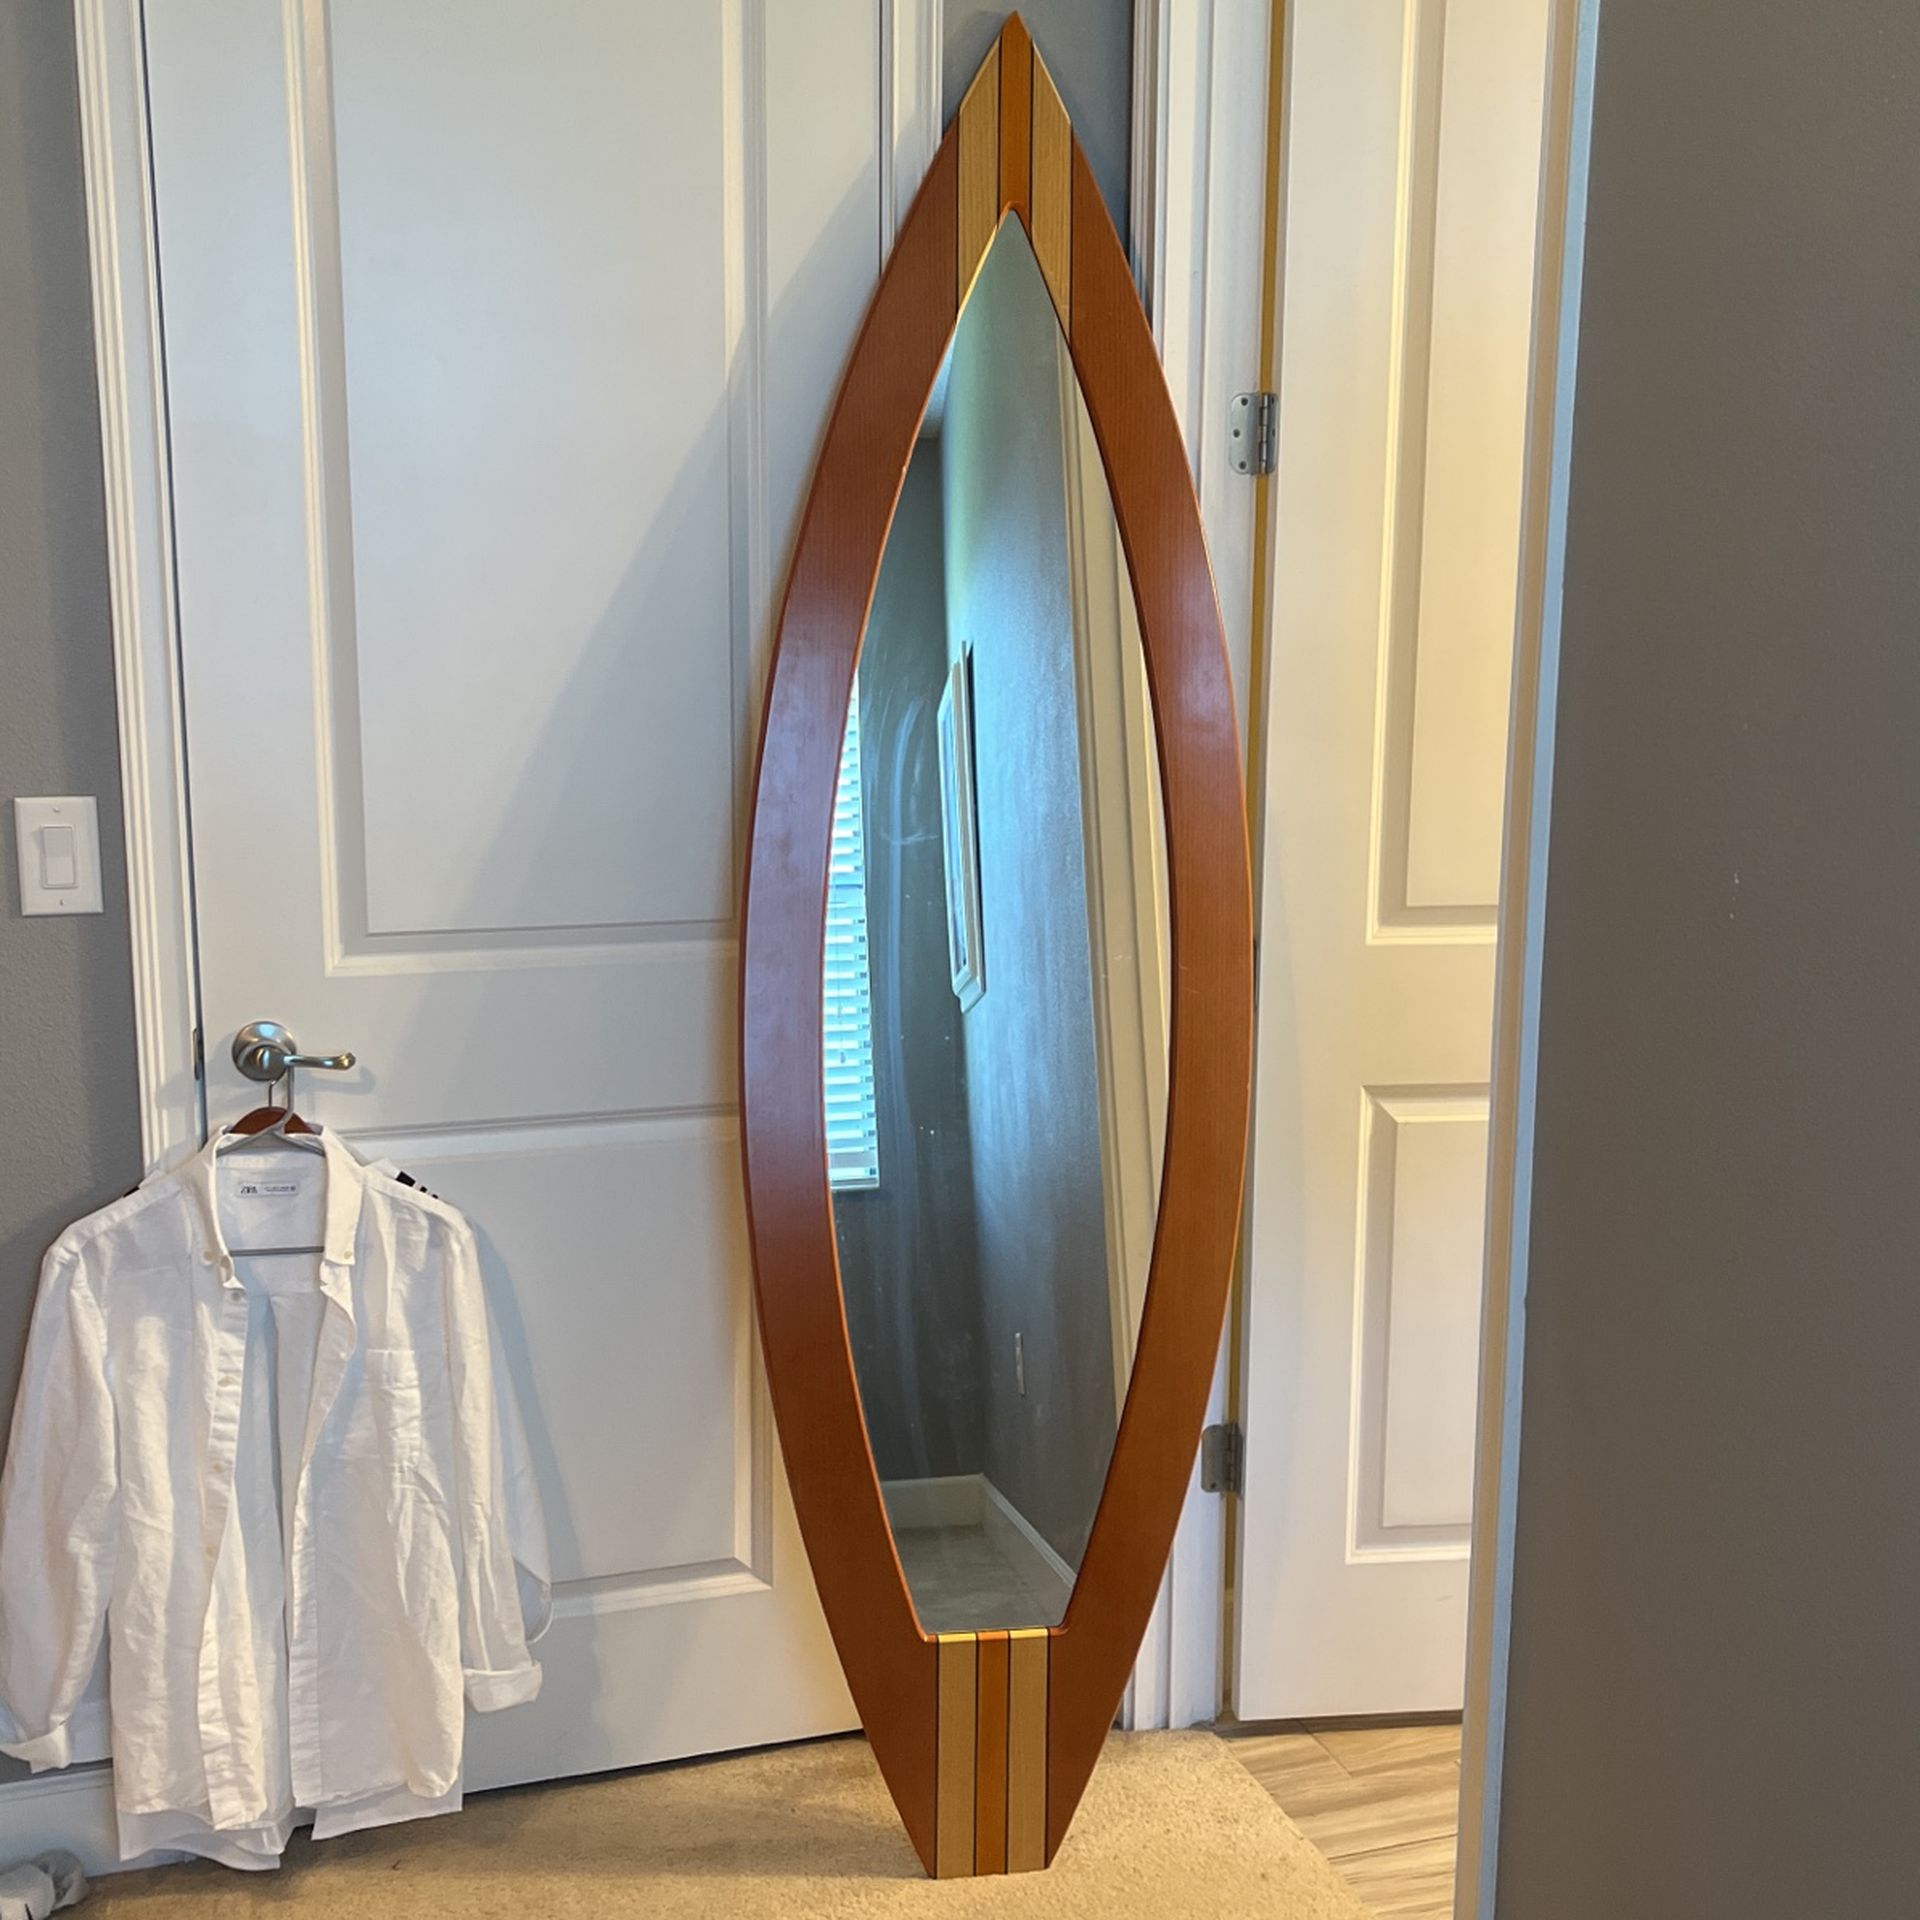 Surfboard Mirror